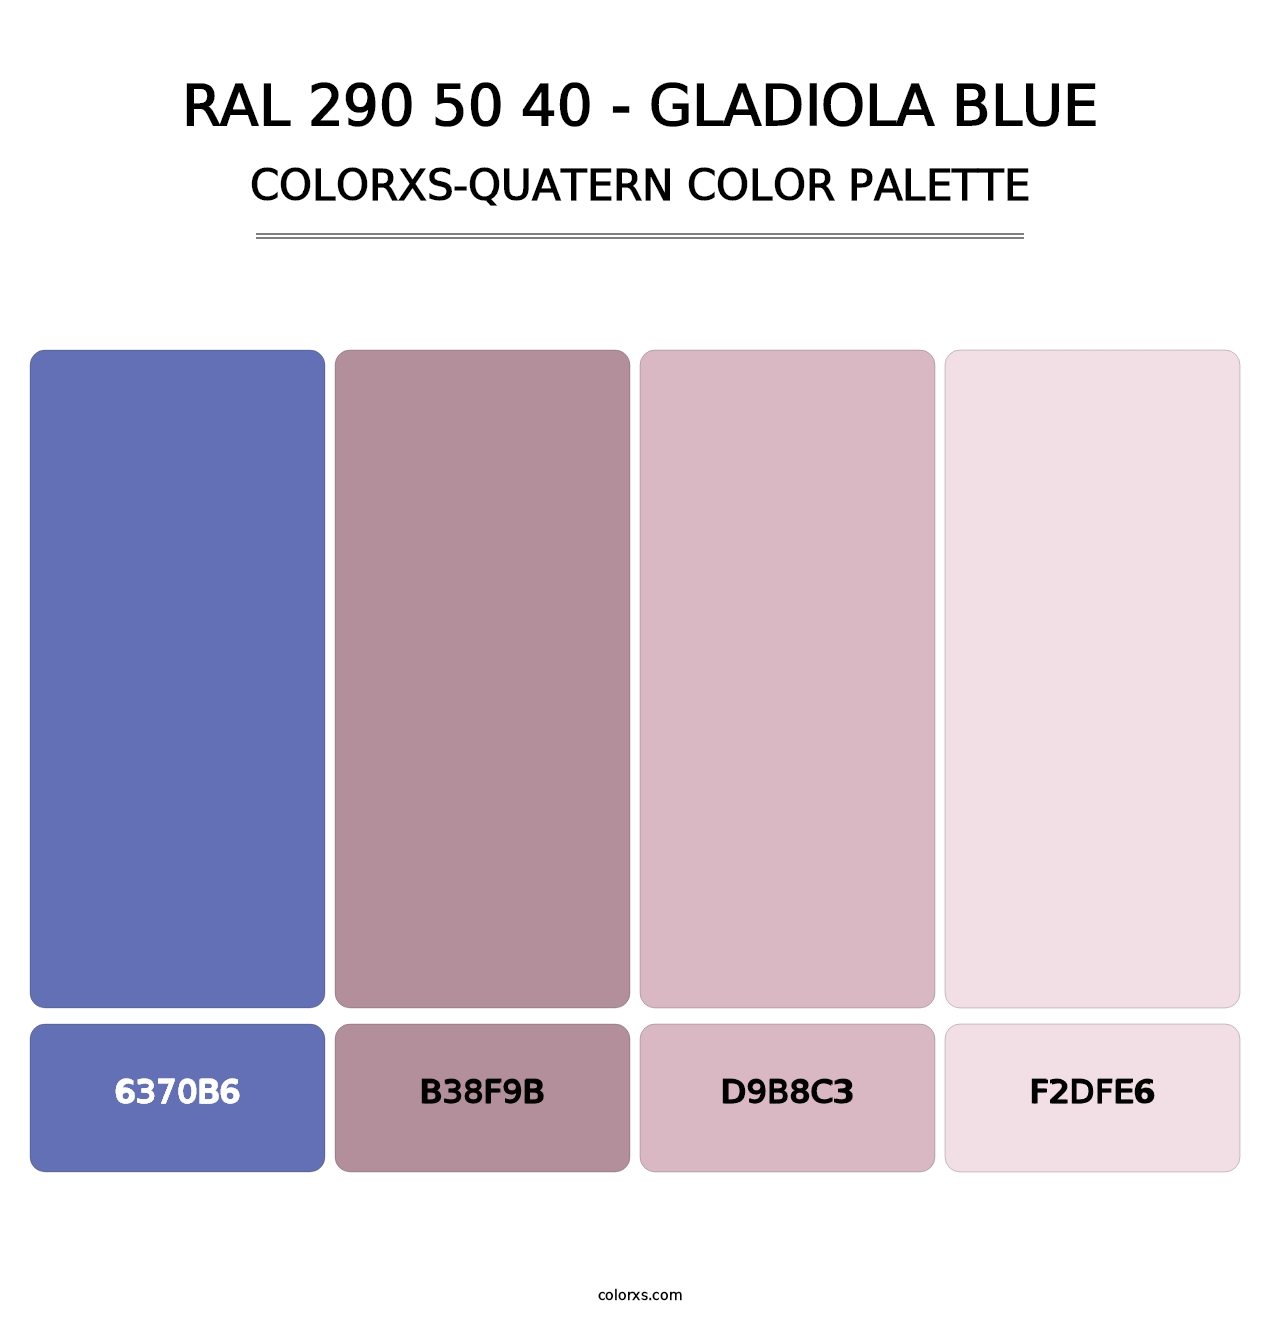 RAL 290 50 40 - Gladiola Blue - Colorxs Quatern Palette